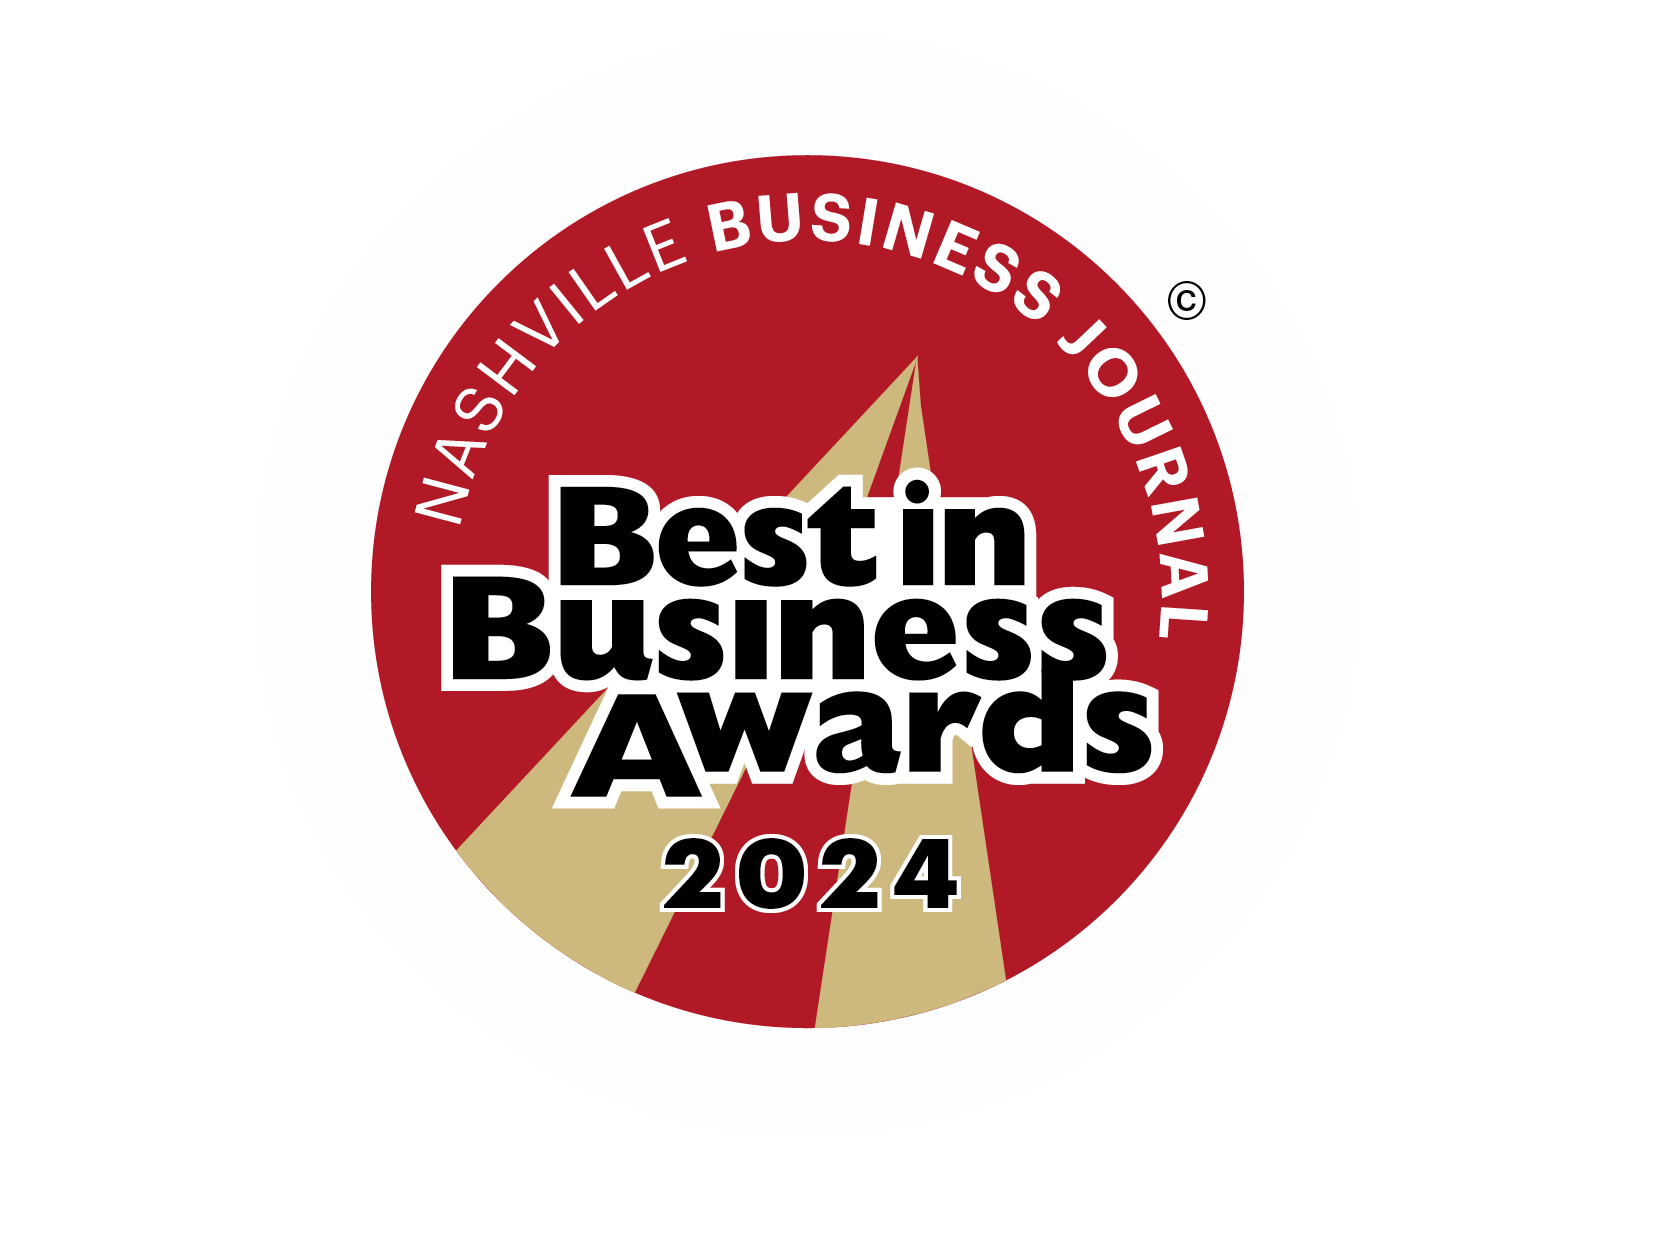 Best in Business Awards Logo 2024 - evidencecare